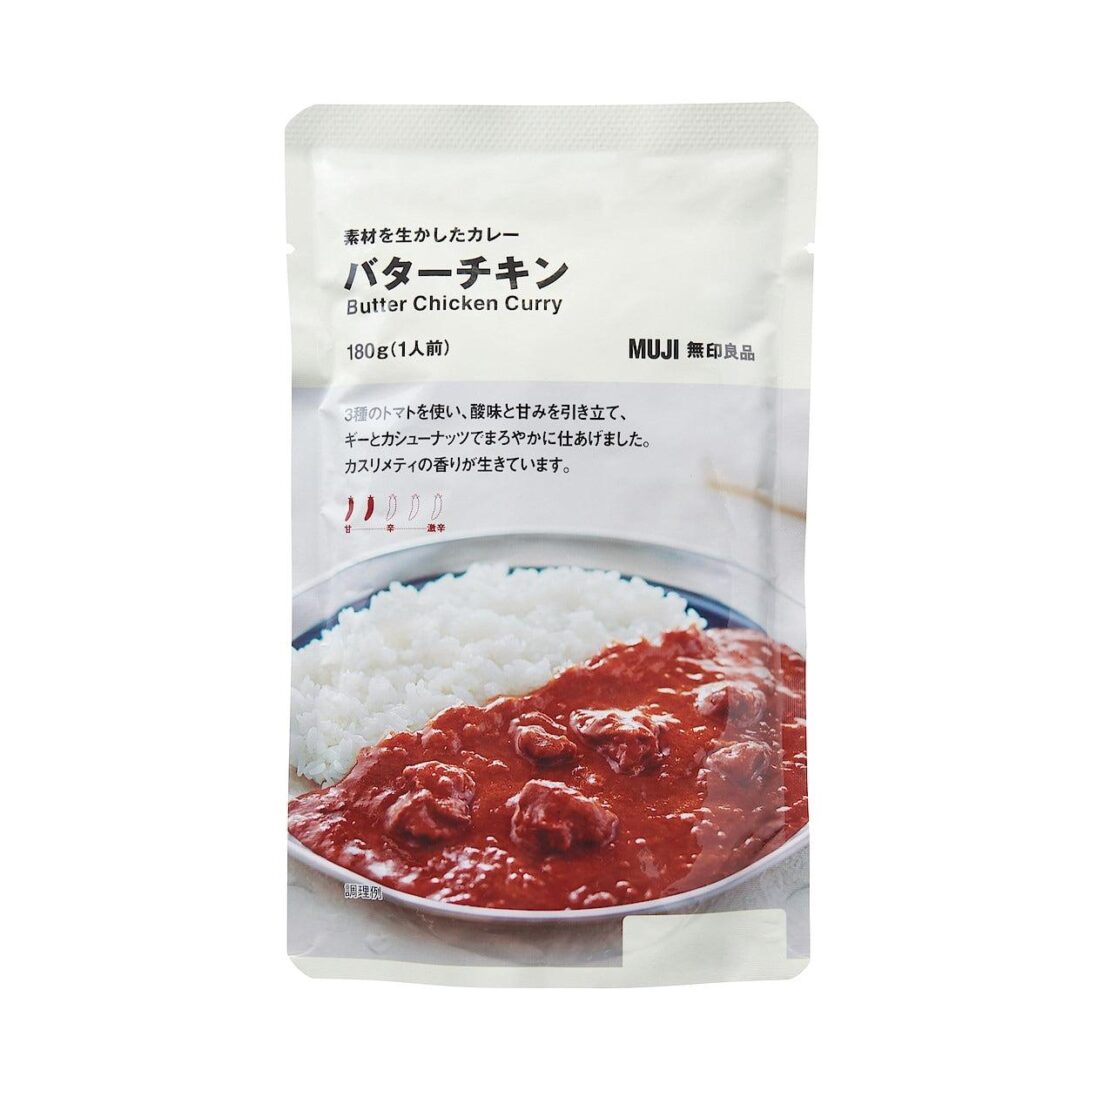 Muji-Butter-Chicken-Curry-Pack-of-10-Japanese-Taste_2048x.jpg